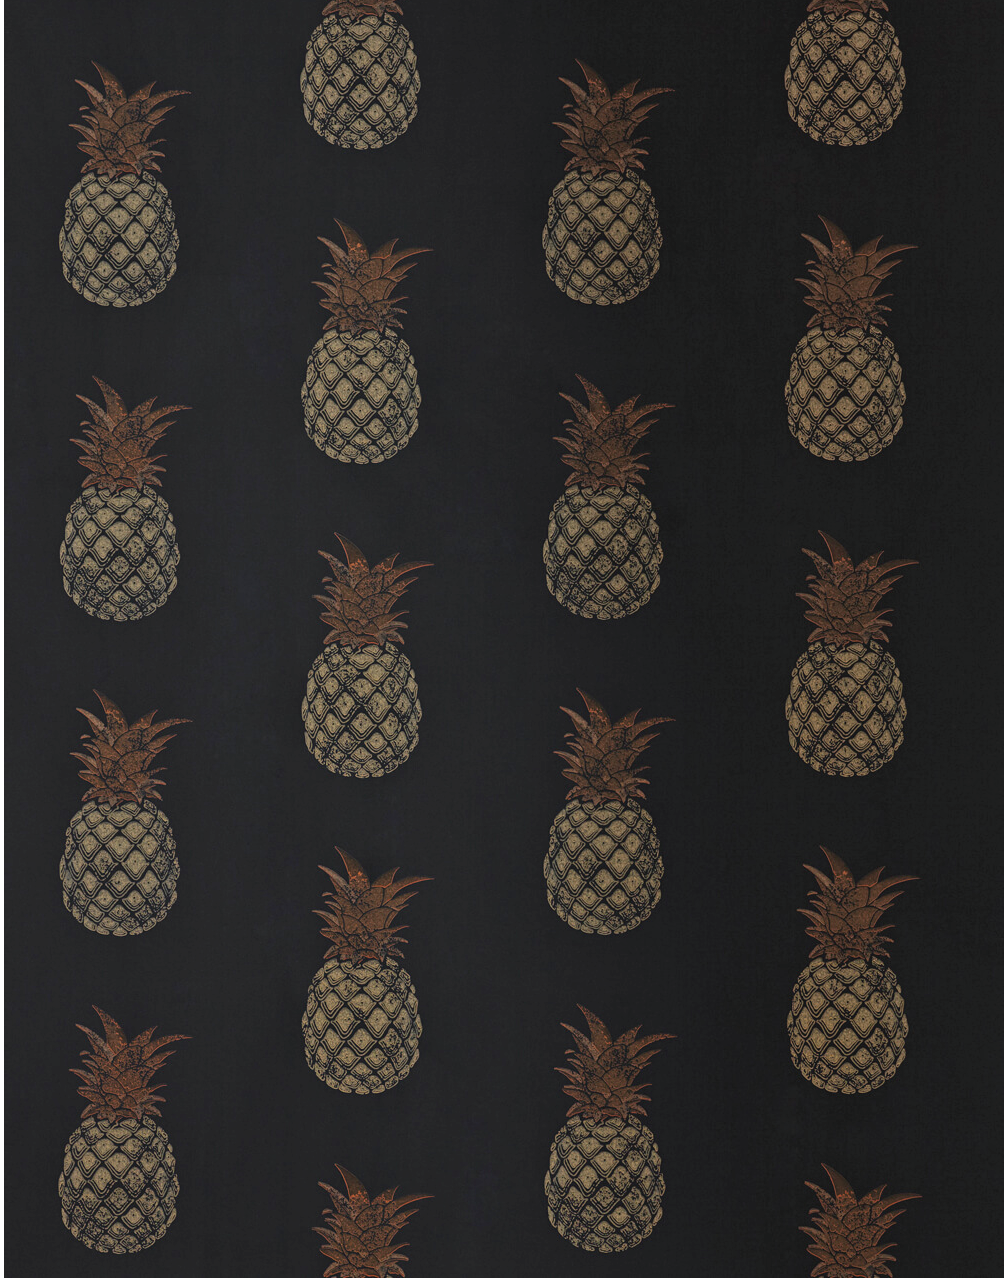 Pineapple, Charcoal